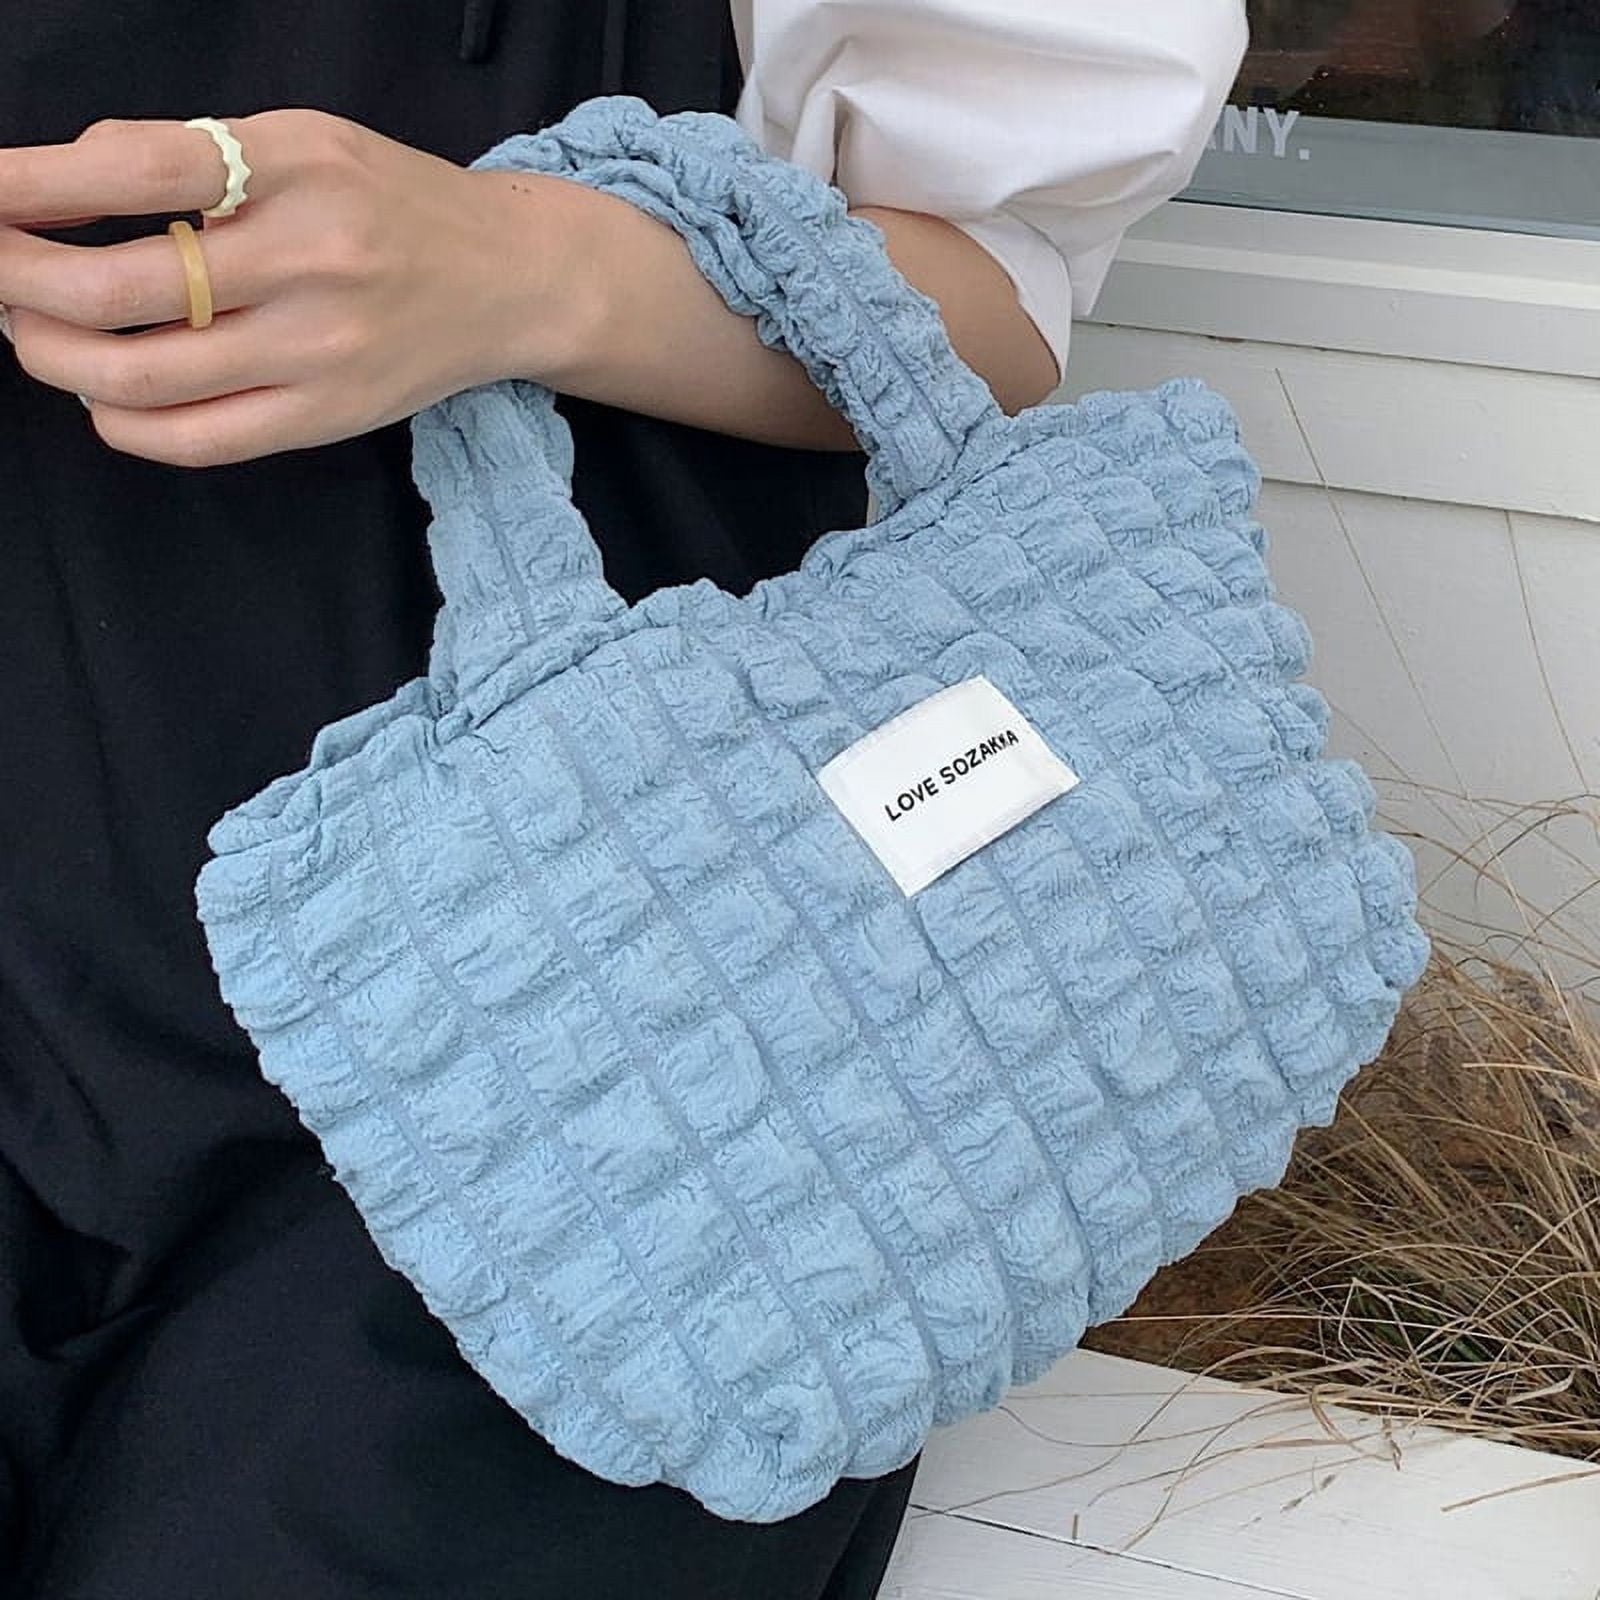 Kawaii Korea Style Mini Plaid Shoulder Bag